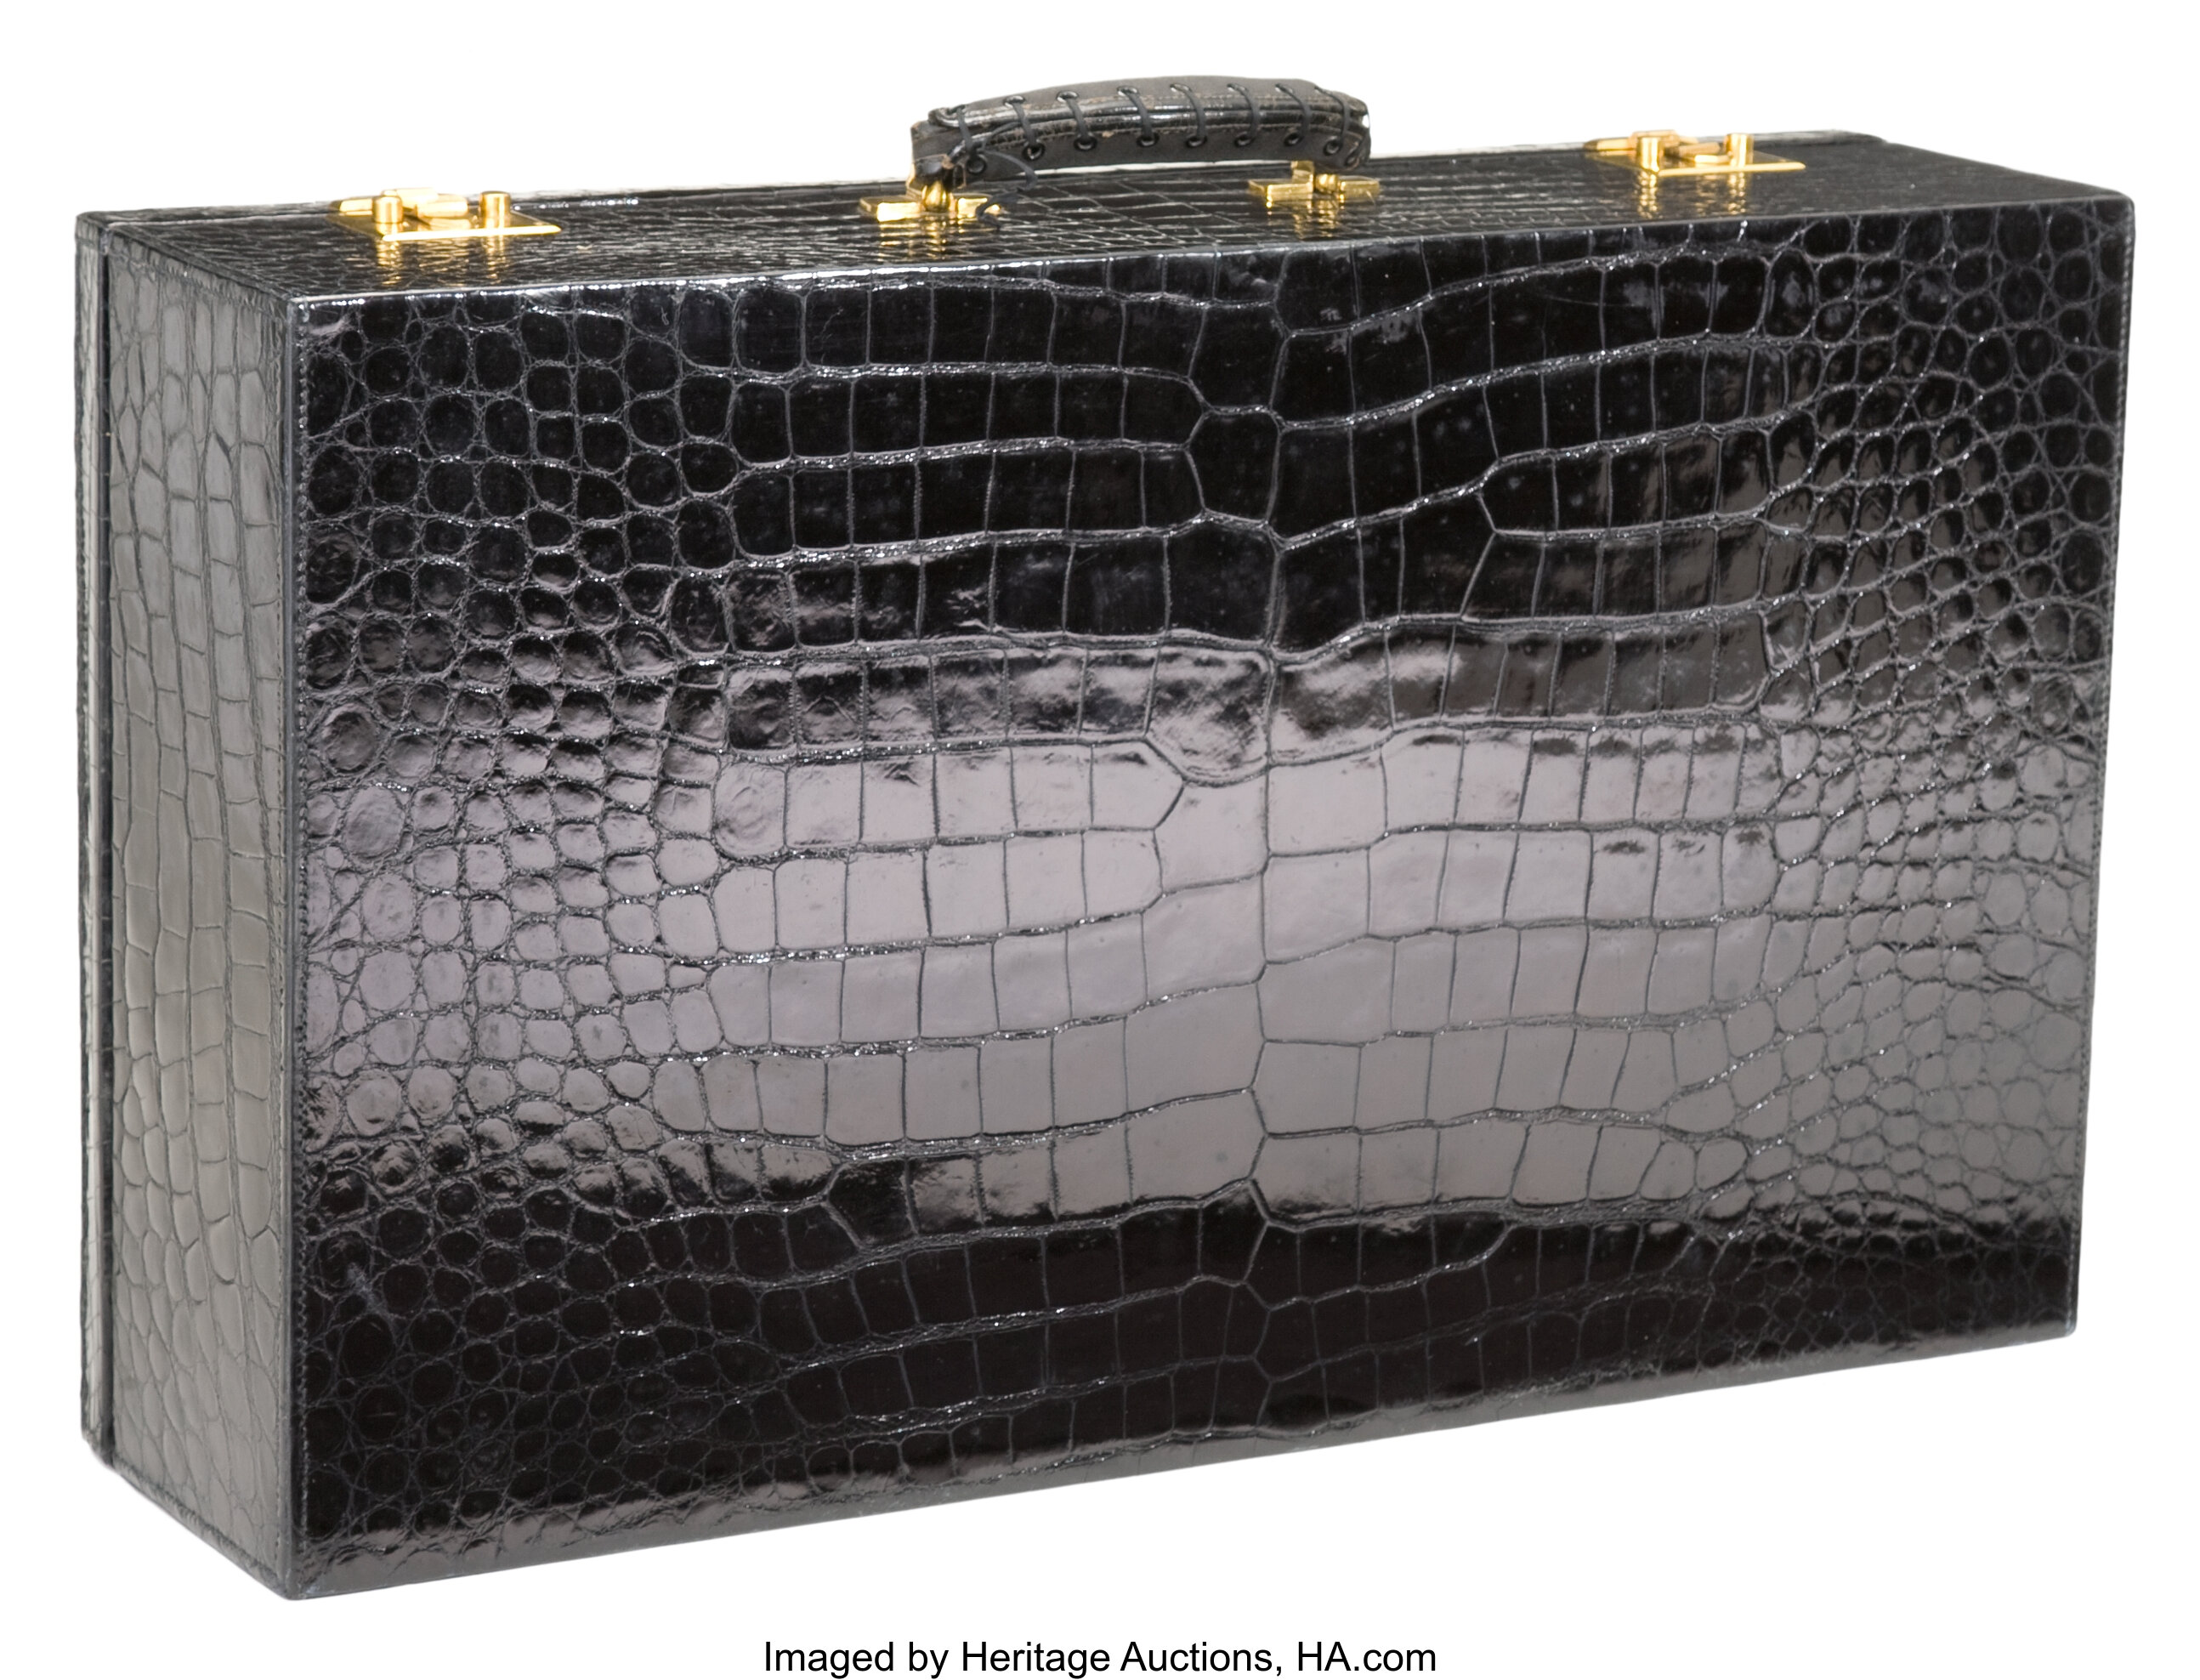 Morabito of Paris Large Black Crocodile Suitcase with Vanity Tray ...